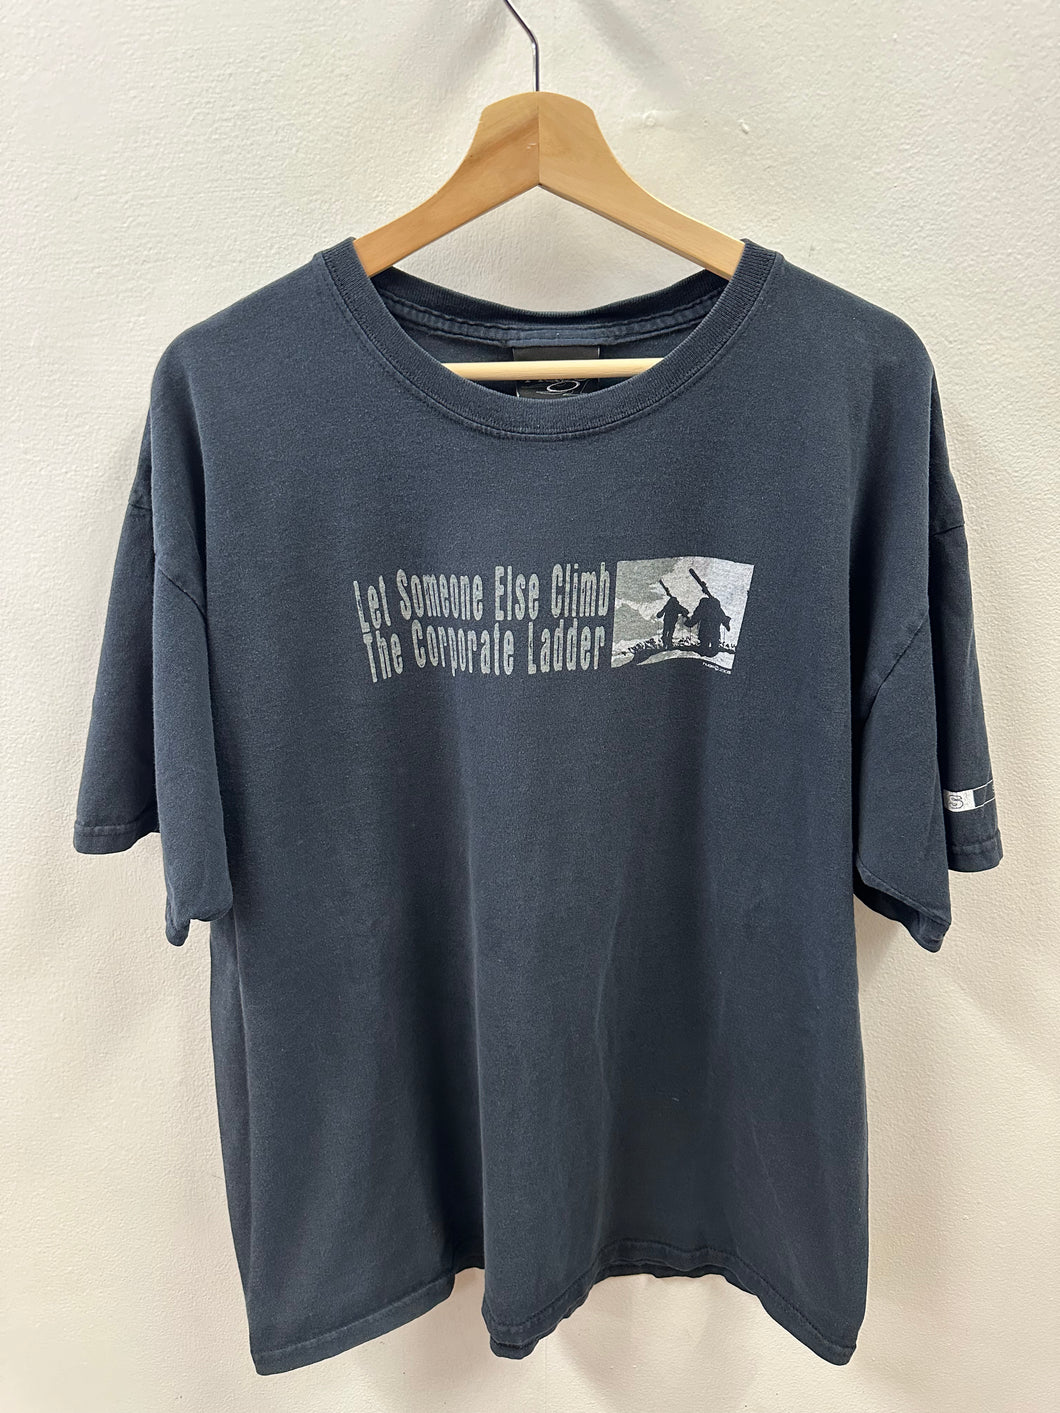 Coporate Ladder Shirt